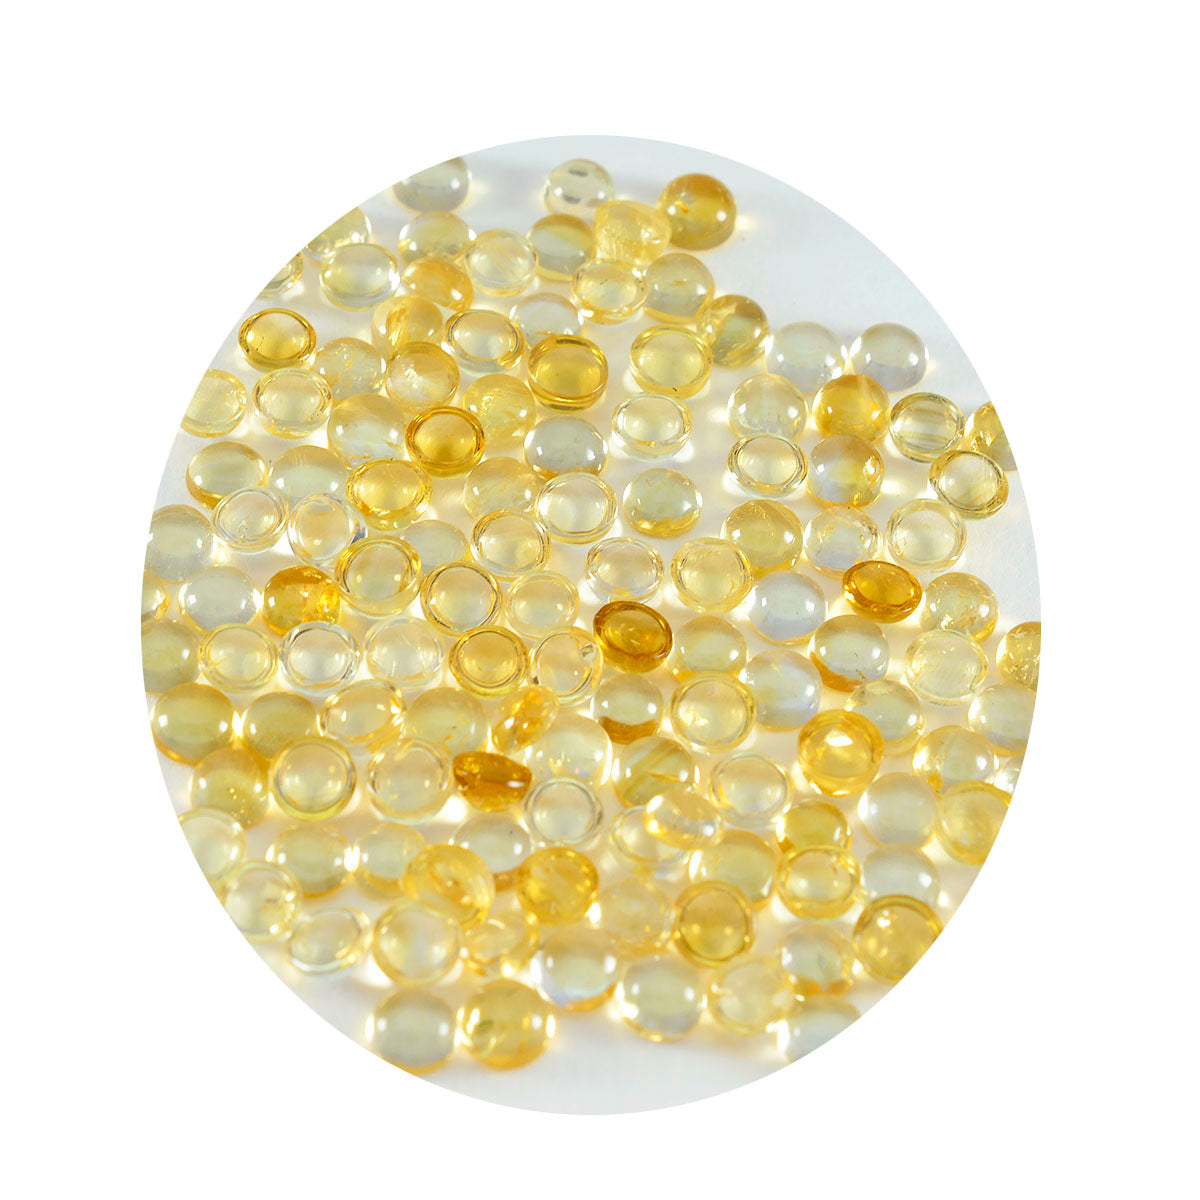 Riyogems 1PC Yellow Citrine Cabochon 5X5 mm Round Shape fantastic Quality Gems